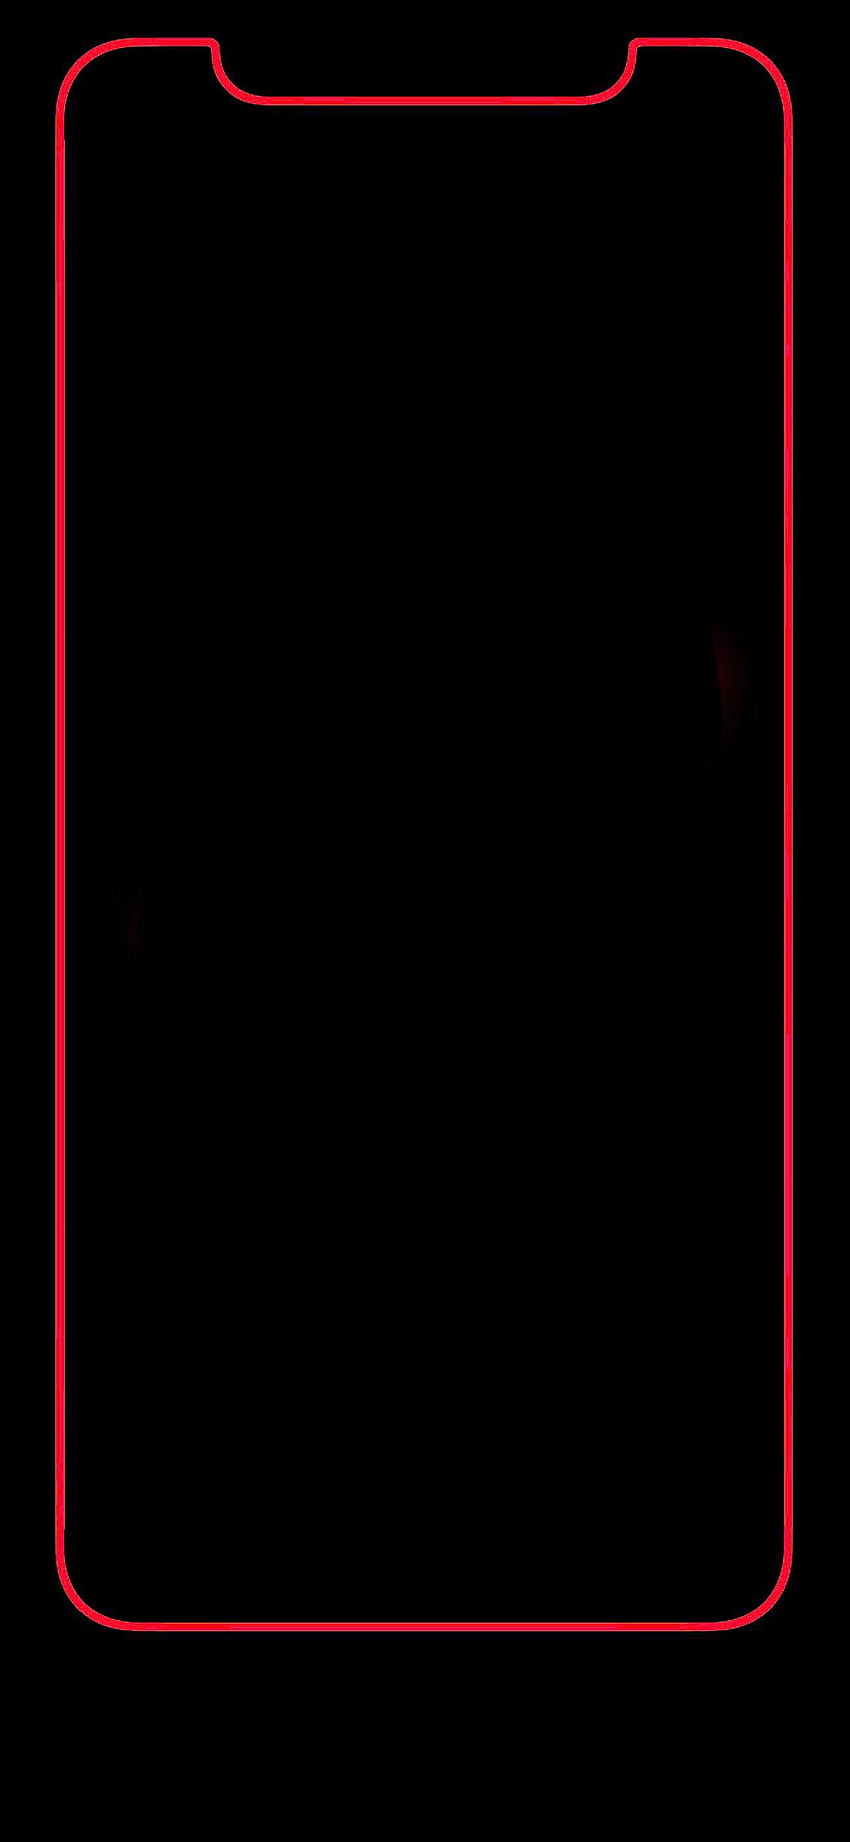 Borde rojo de Iphone X, borde de iPhone xr fondo de pantalla del teléfono